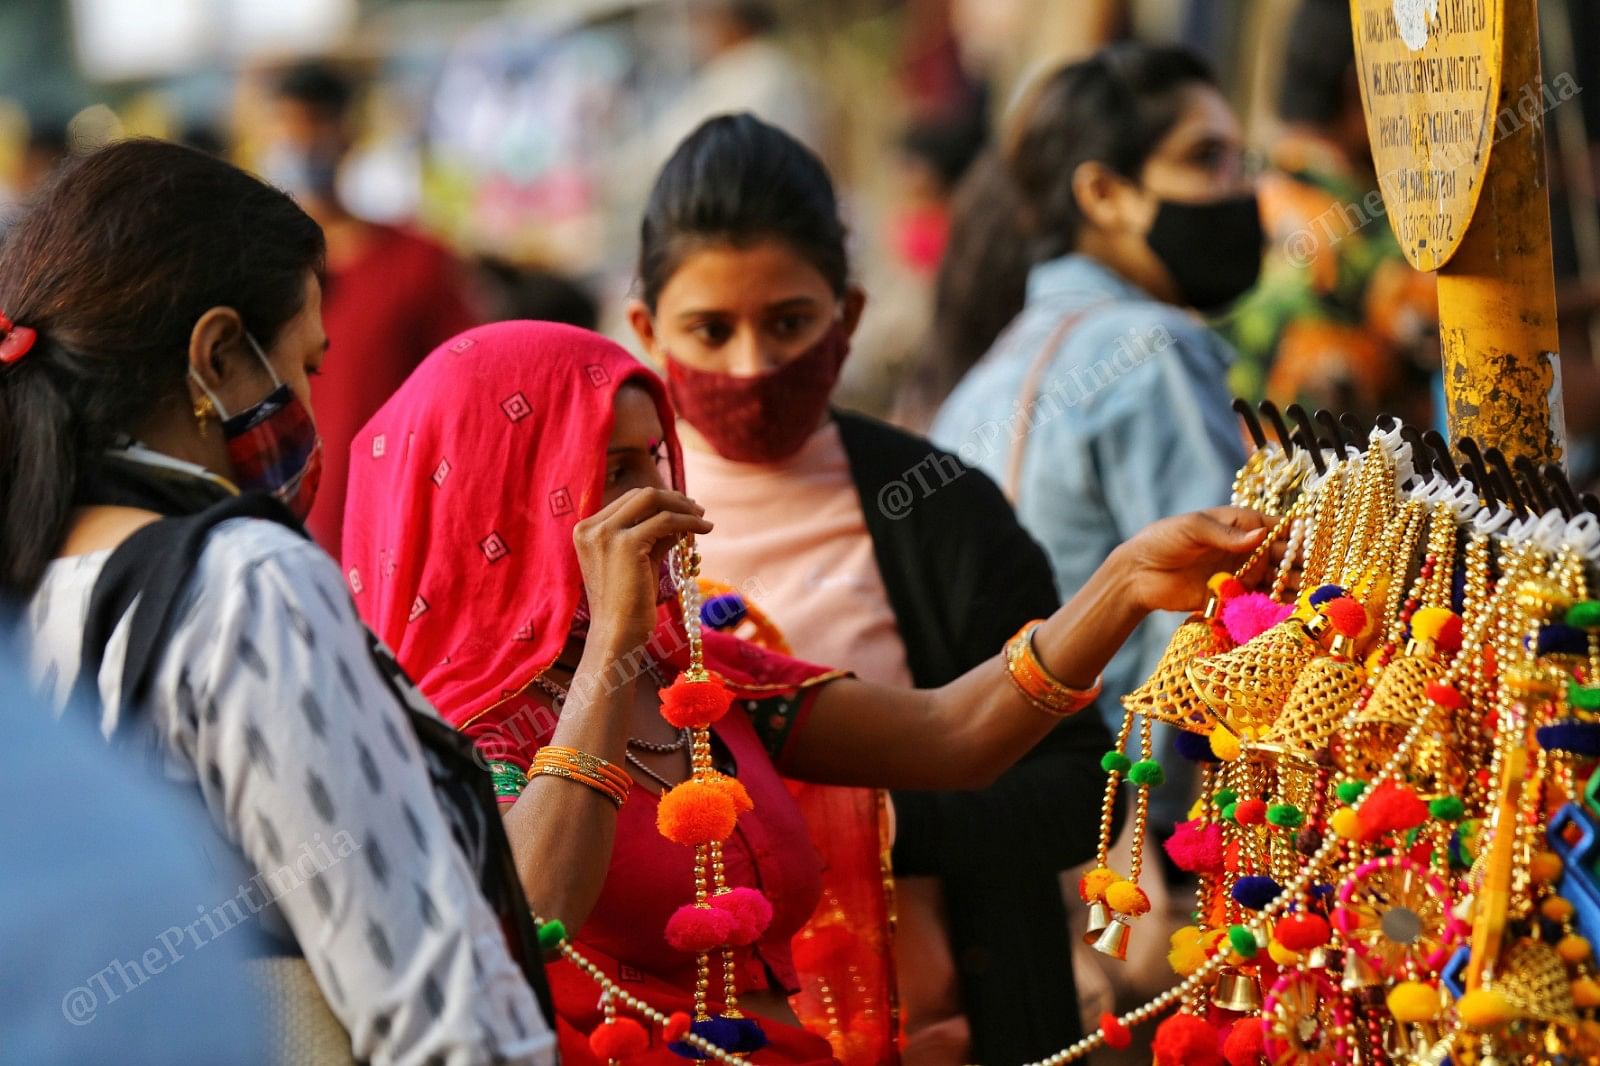 People buy props for Diwali celebrations | Photo: Suraj Singh Bisht | ThePrint